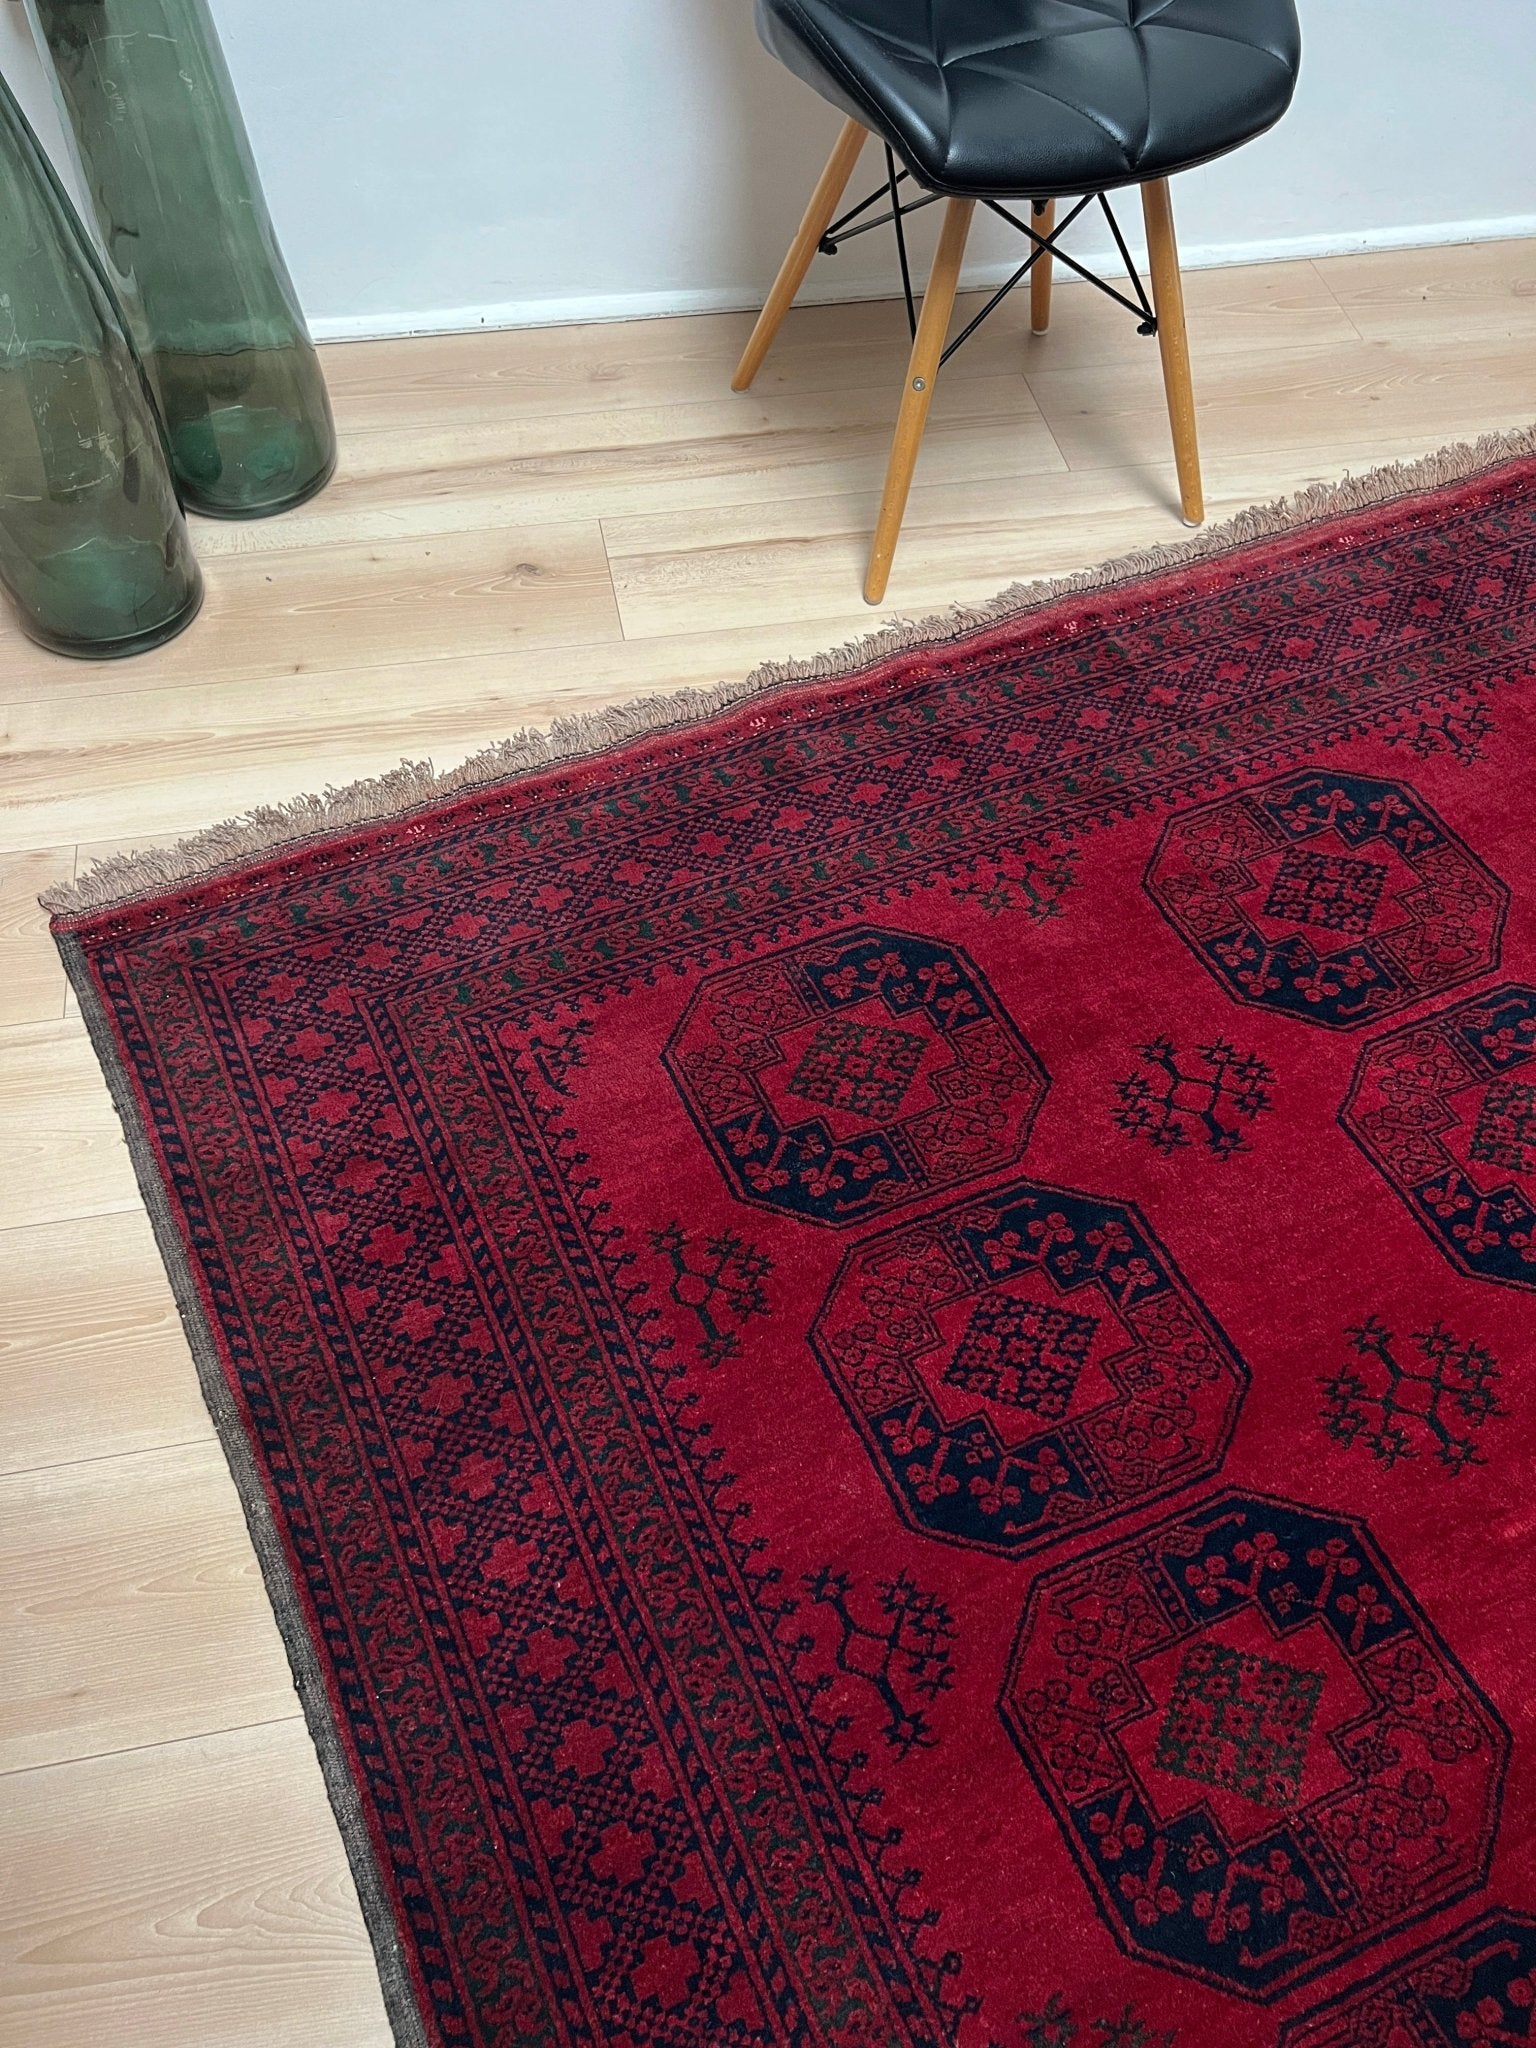 Ersari elephant foot turkmen rug. Oriental rug shop san francisco bay area. 6x8 burgundy rug. Buy handmade rug online